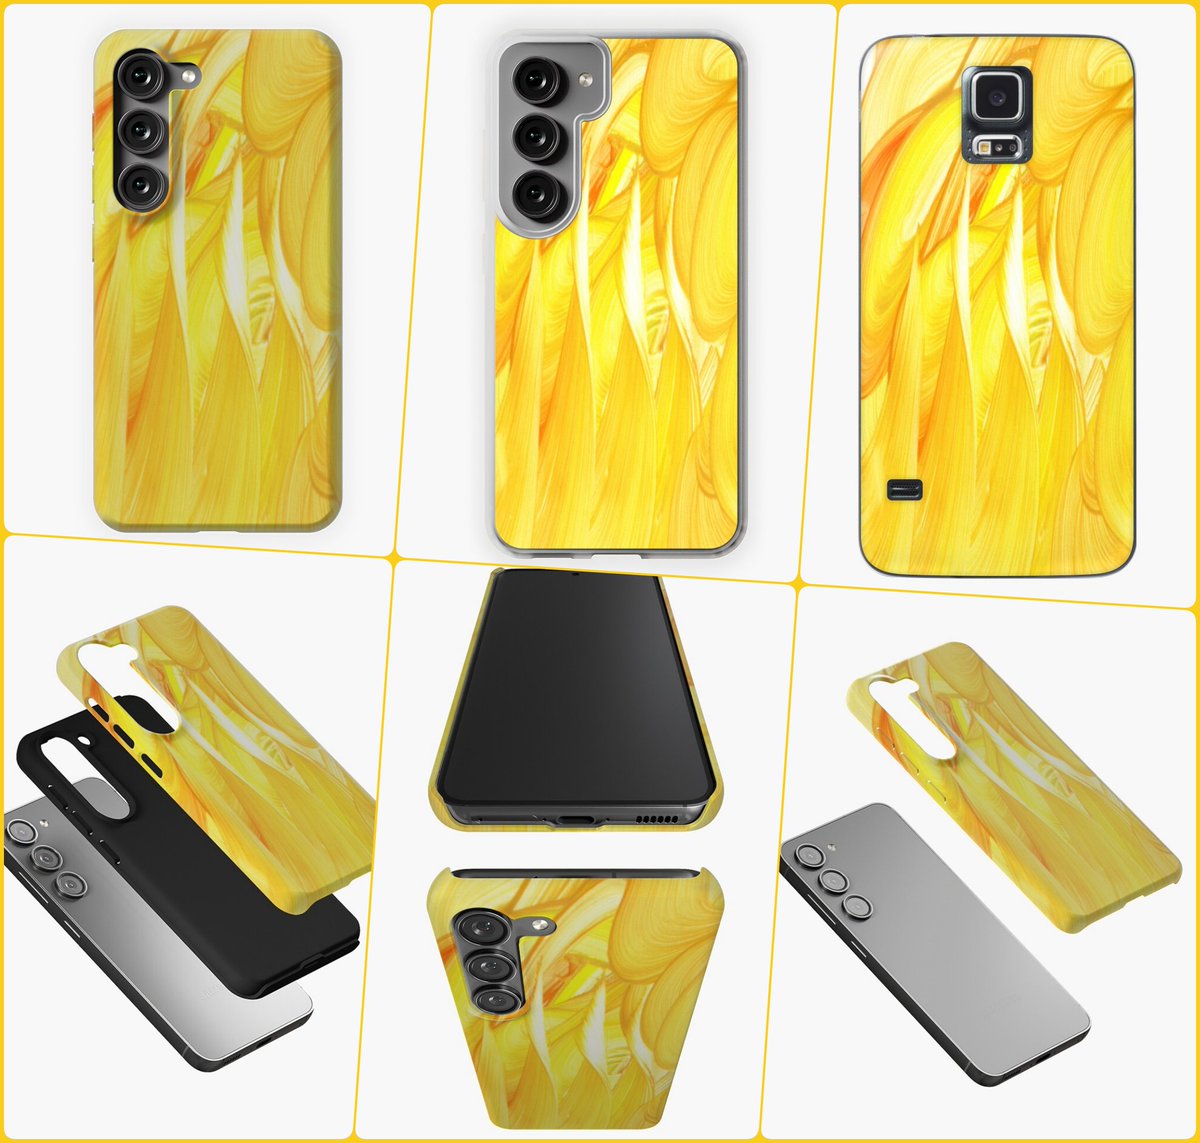 Usmu Samsung Galaxy Phone Case~by Art Falaxy~
~Phone Art~
#accessories #art #artfalaxy #galaxy #iPad #iphones #laptop #phones #skins #redbubble #wallets #Samsung #trendy #modern #FindYourThing

redbubble.com/i/samsung-case…
COLLECTION: redbubble.com/shop/ap/322074…